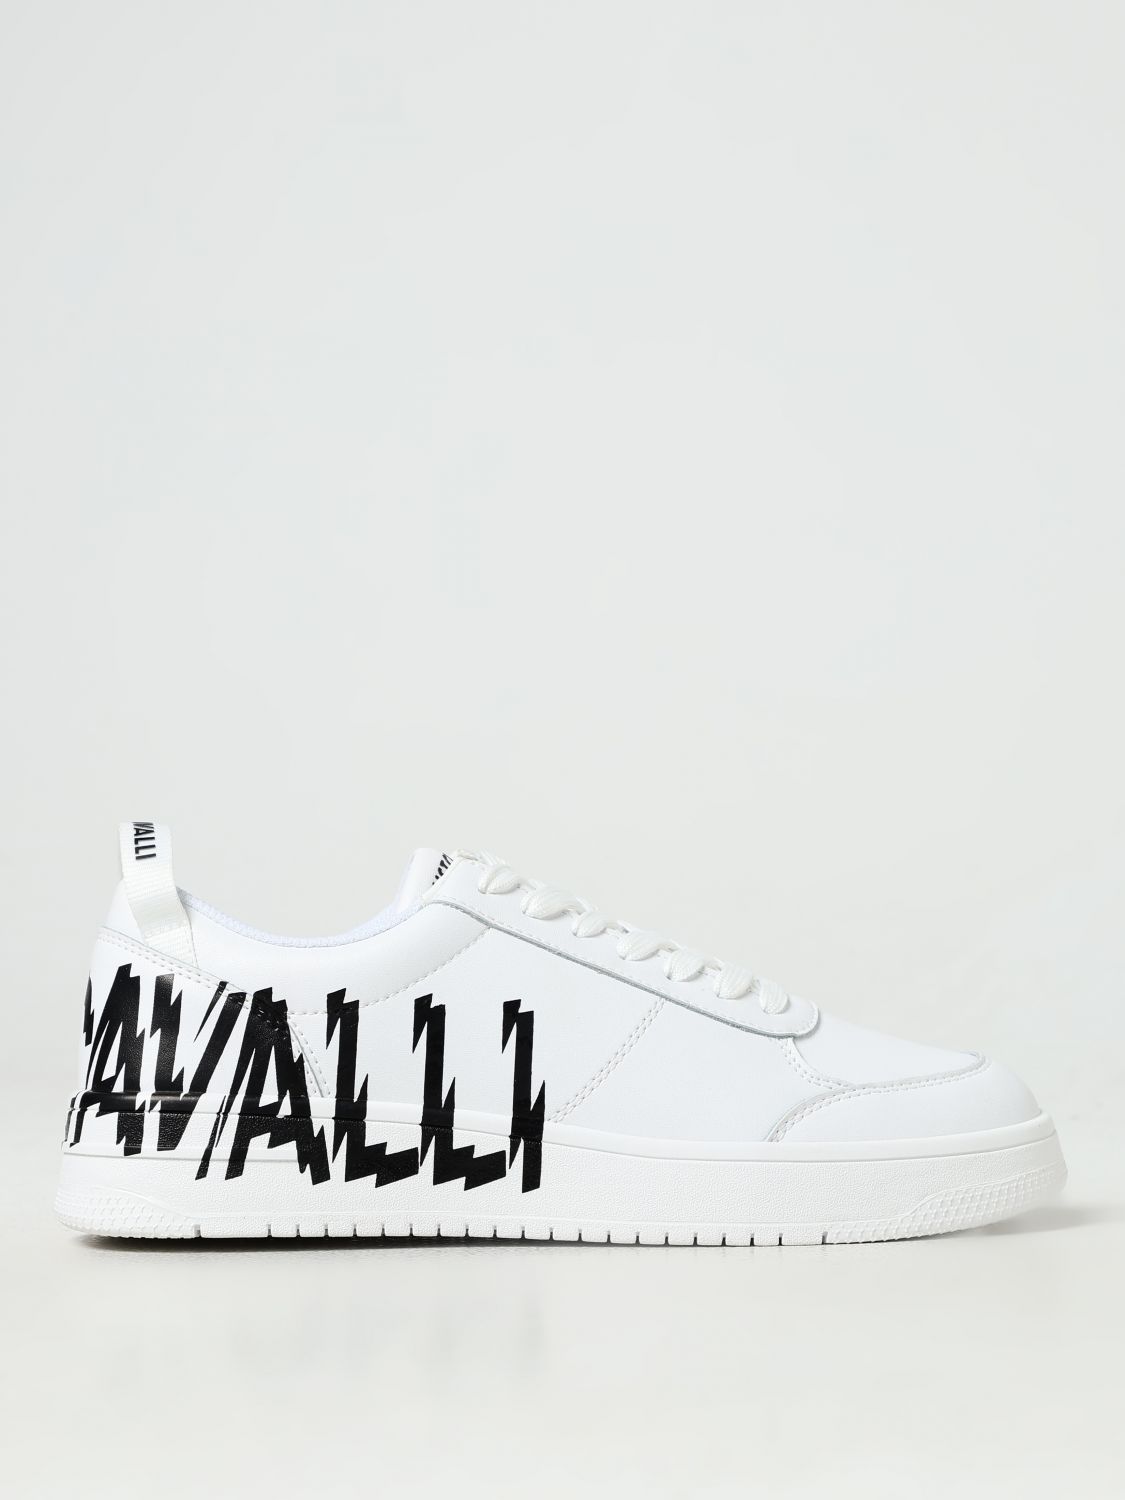 Shop Just Cavalli Sneakers  Men Color White